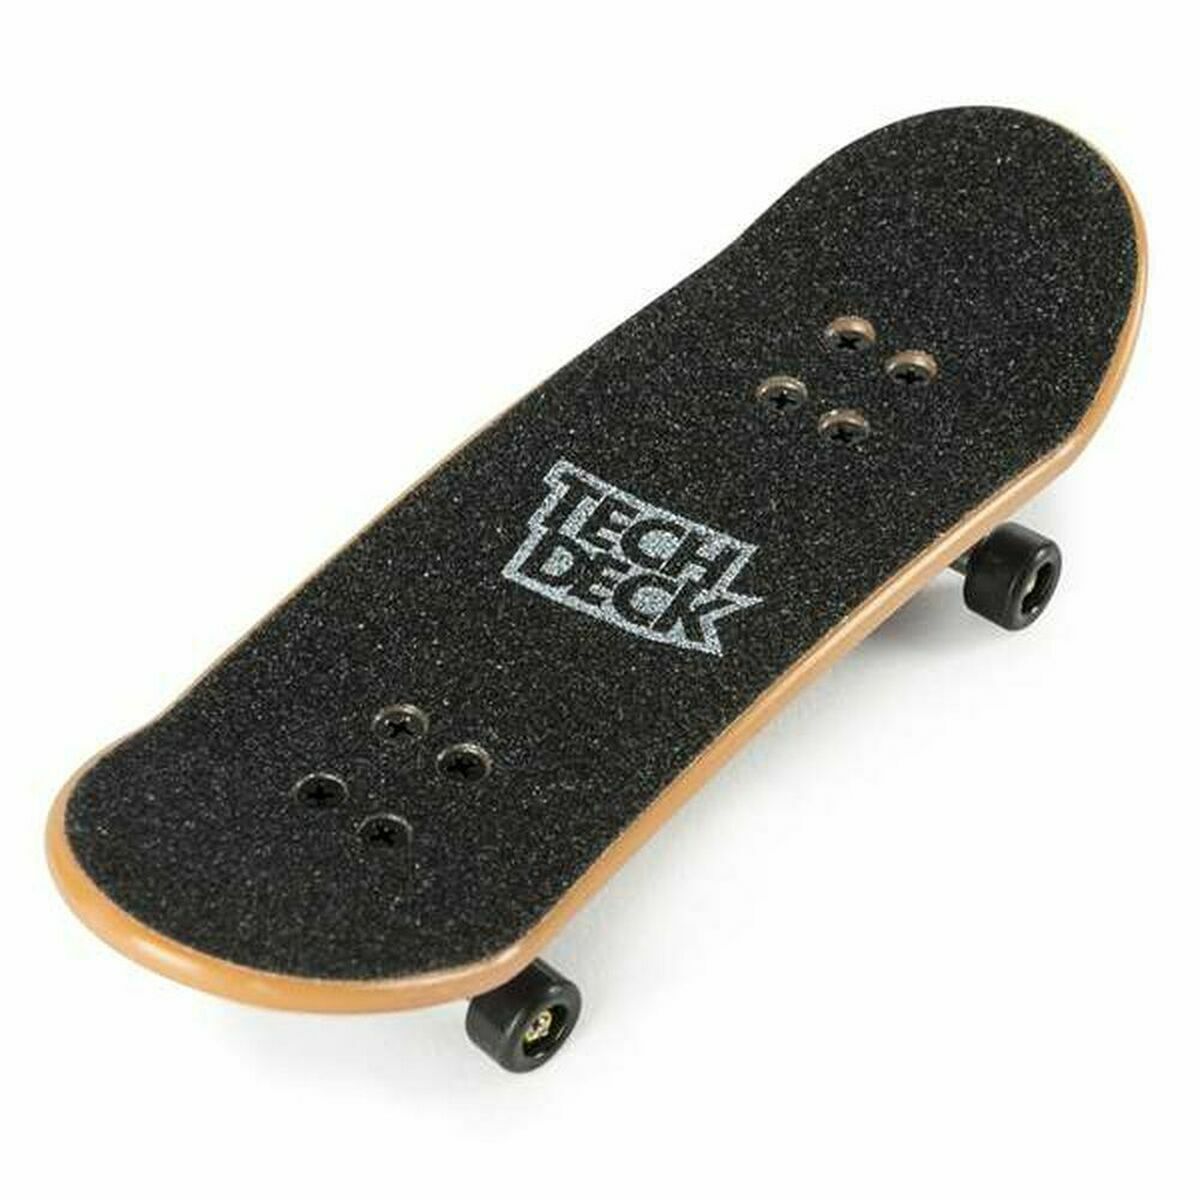 Finger skateboard Tech Deck 10 cm